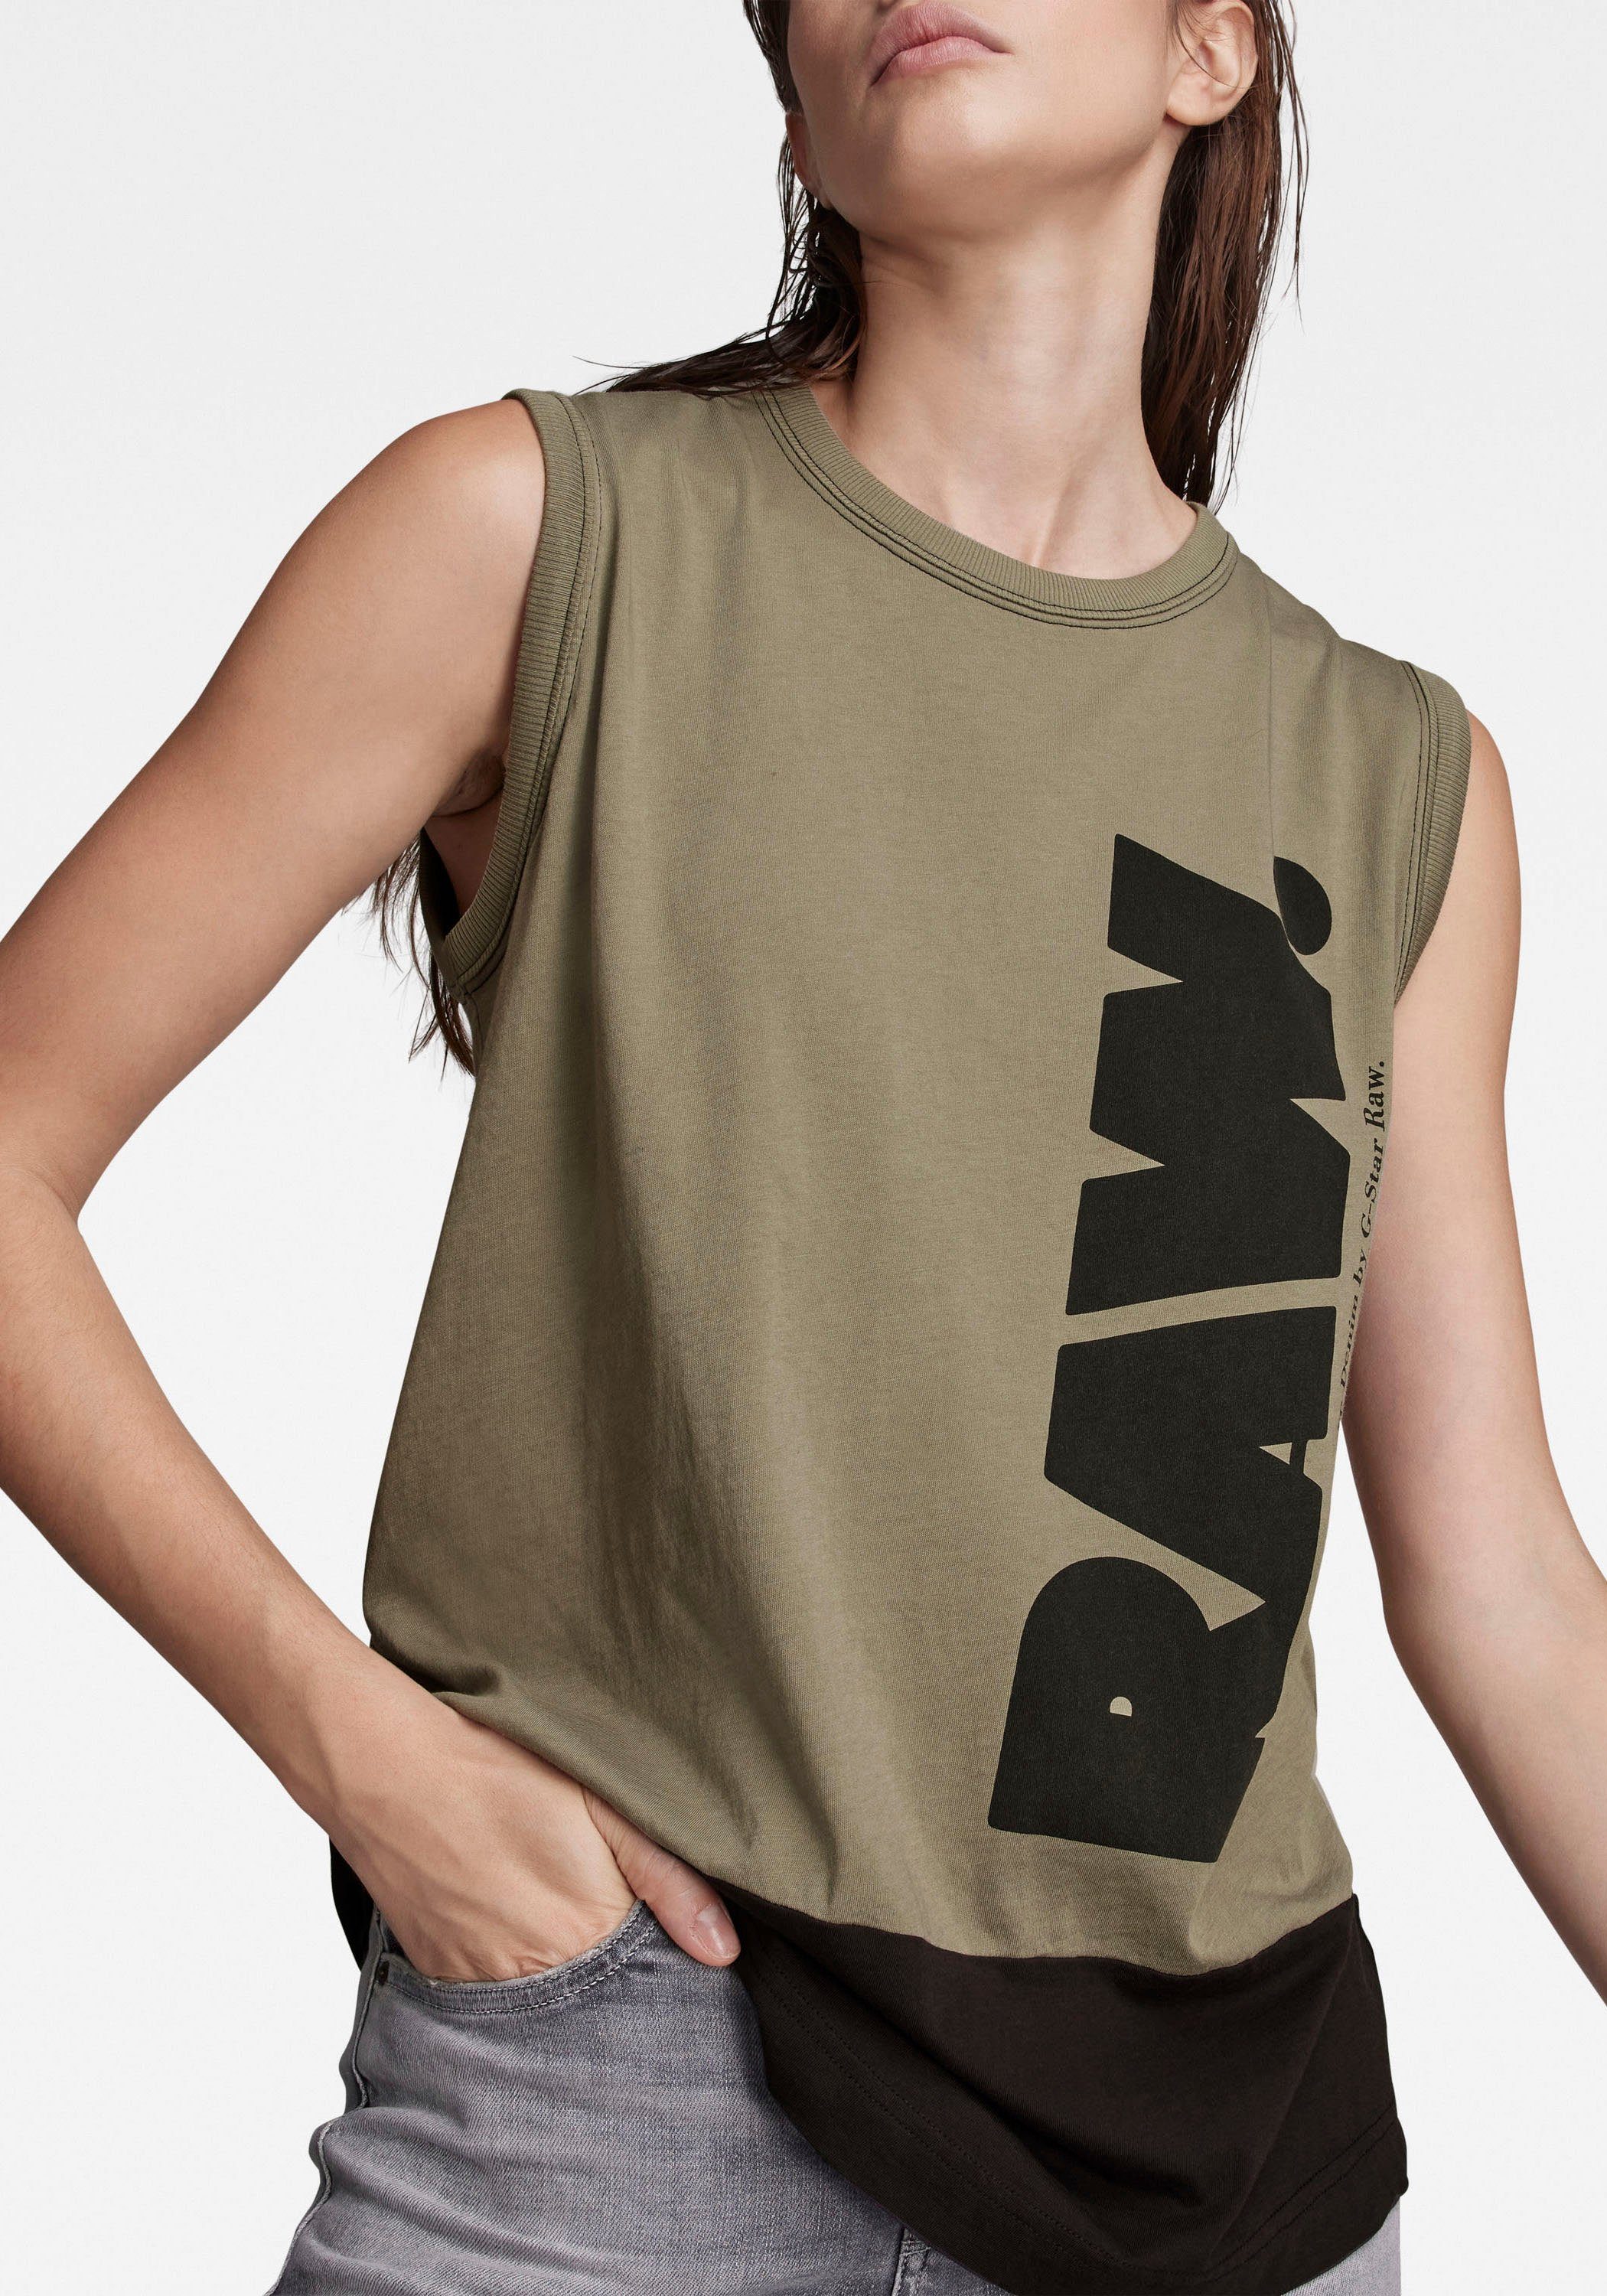 G-Star RAW T-Shirt T-Shirt block color Lash Grafikdruck tank Logo shamrock/dk mti vorne (oliv/schwarz) black to